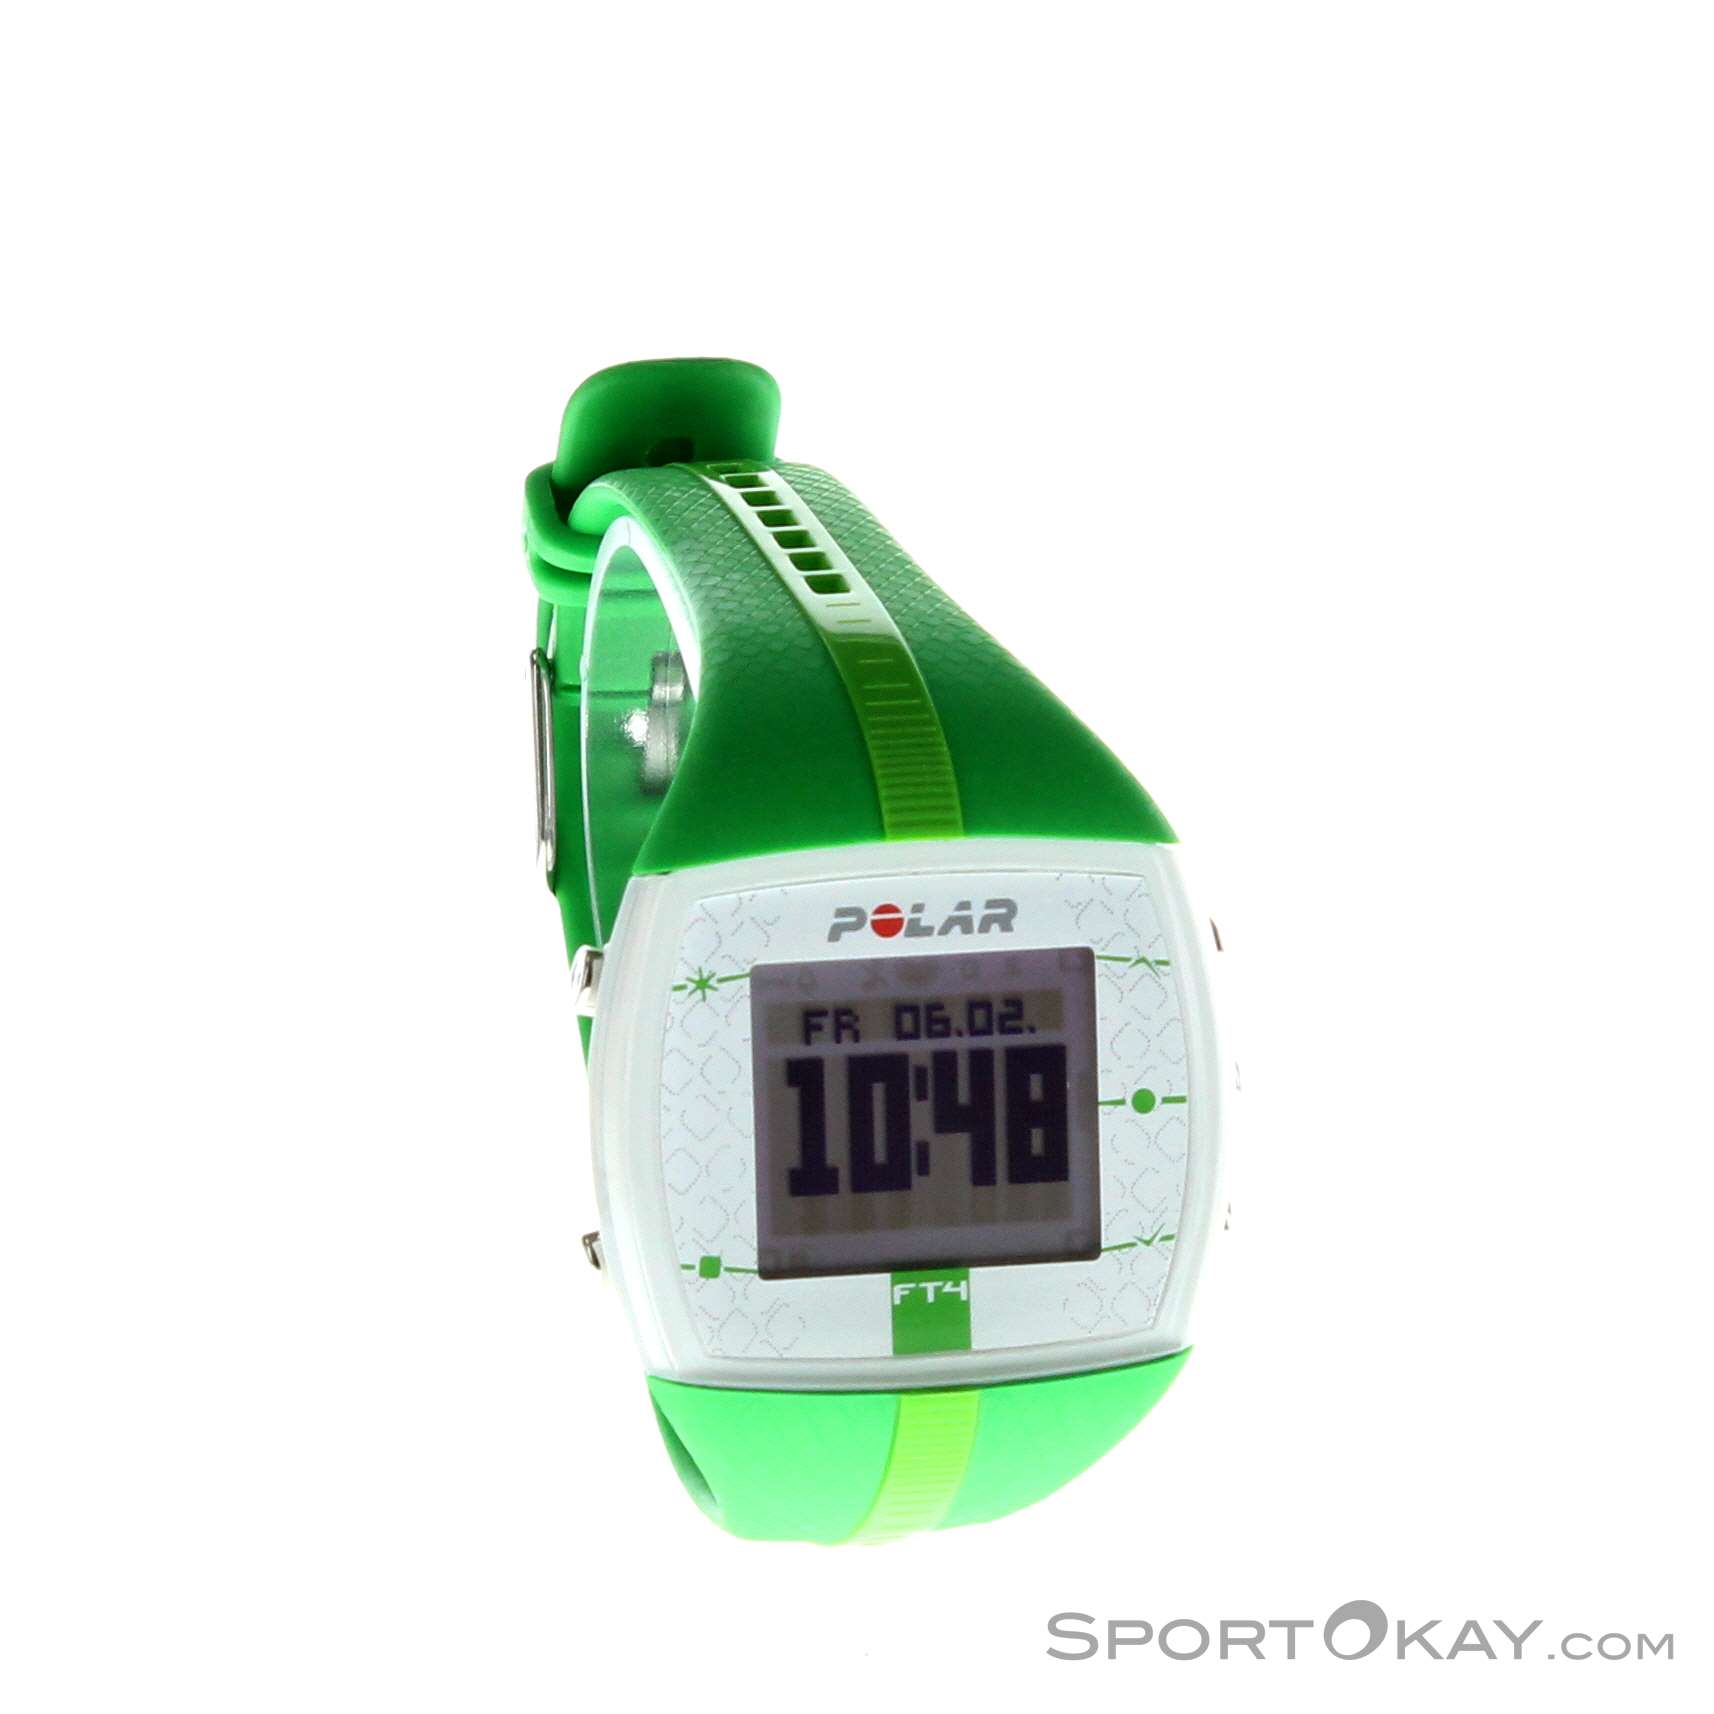 Polar FT4 Sportuhr - Running Watch - Heart Rate Watches - Digital - All